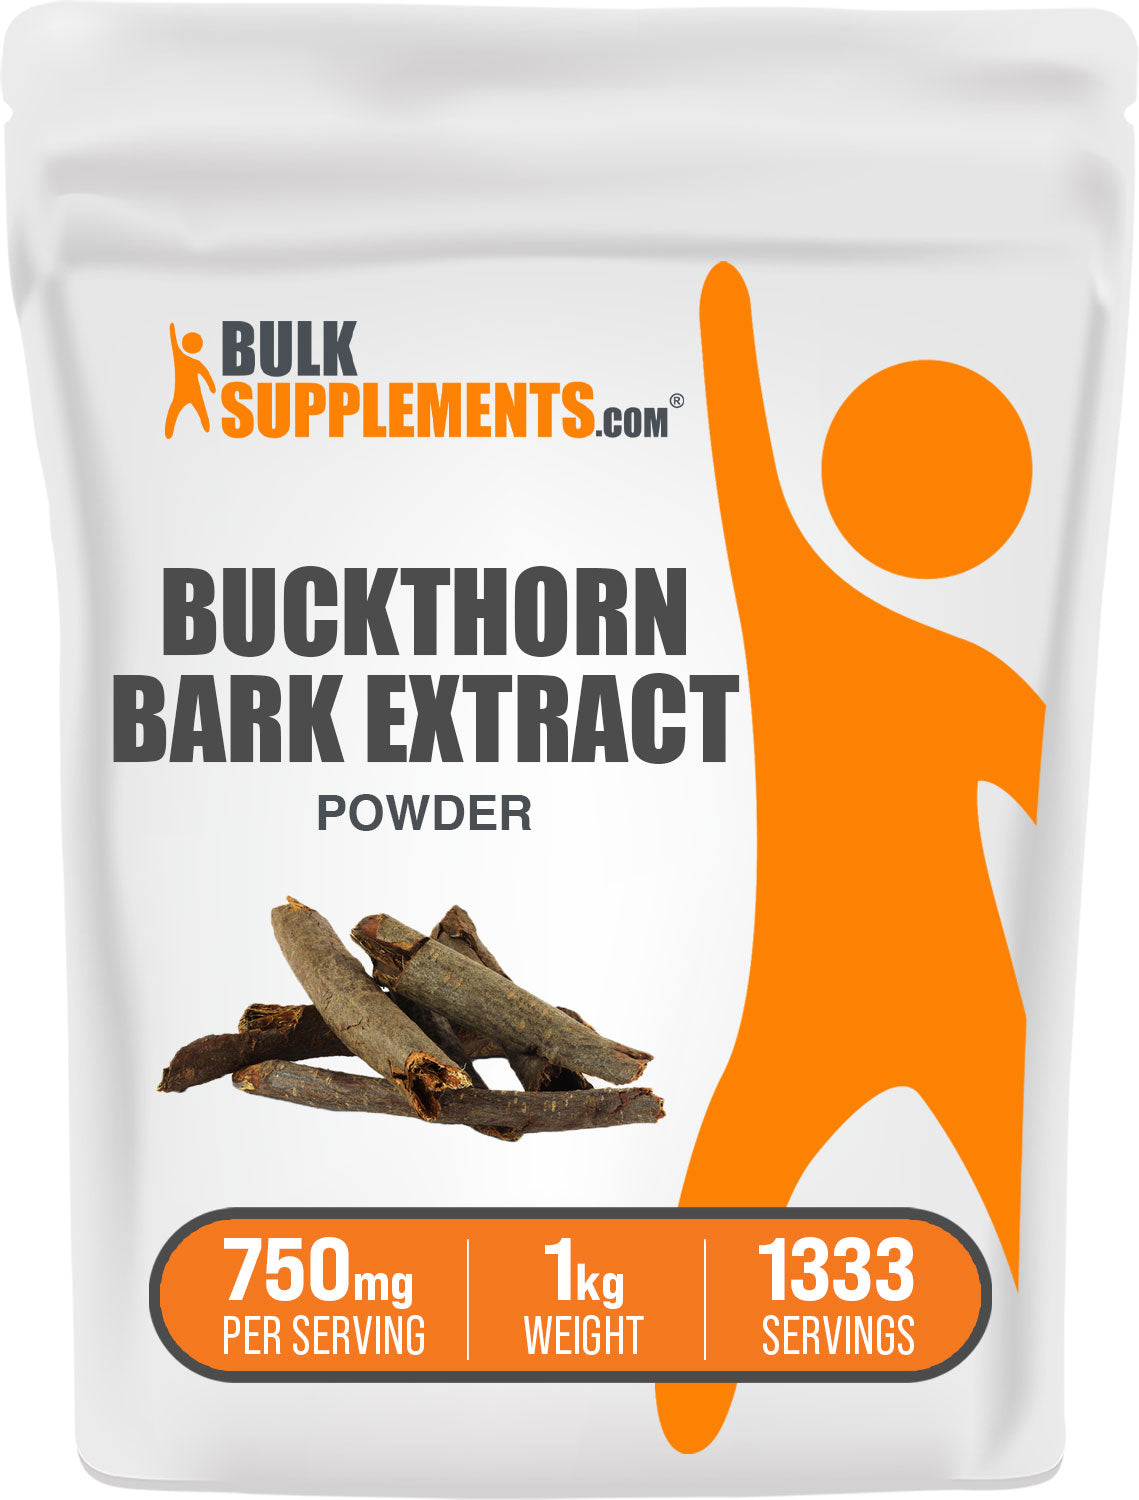 1kg of Buckthorn Bark Extract